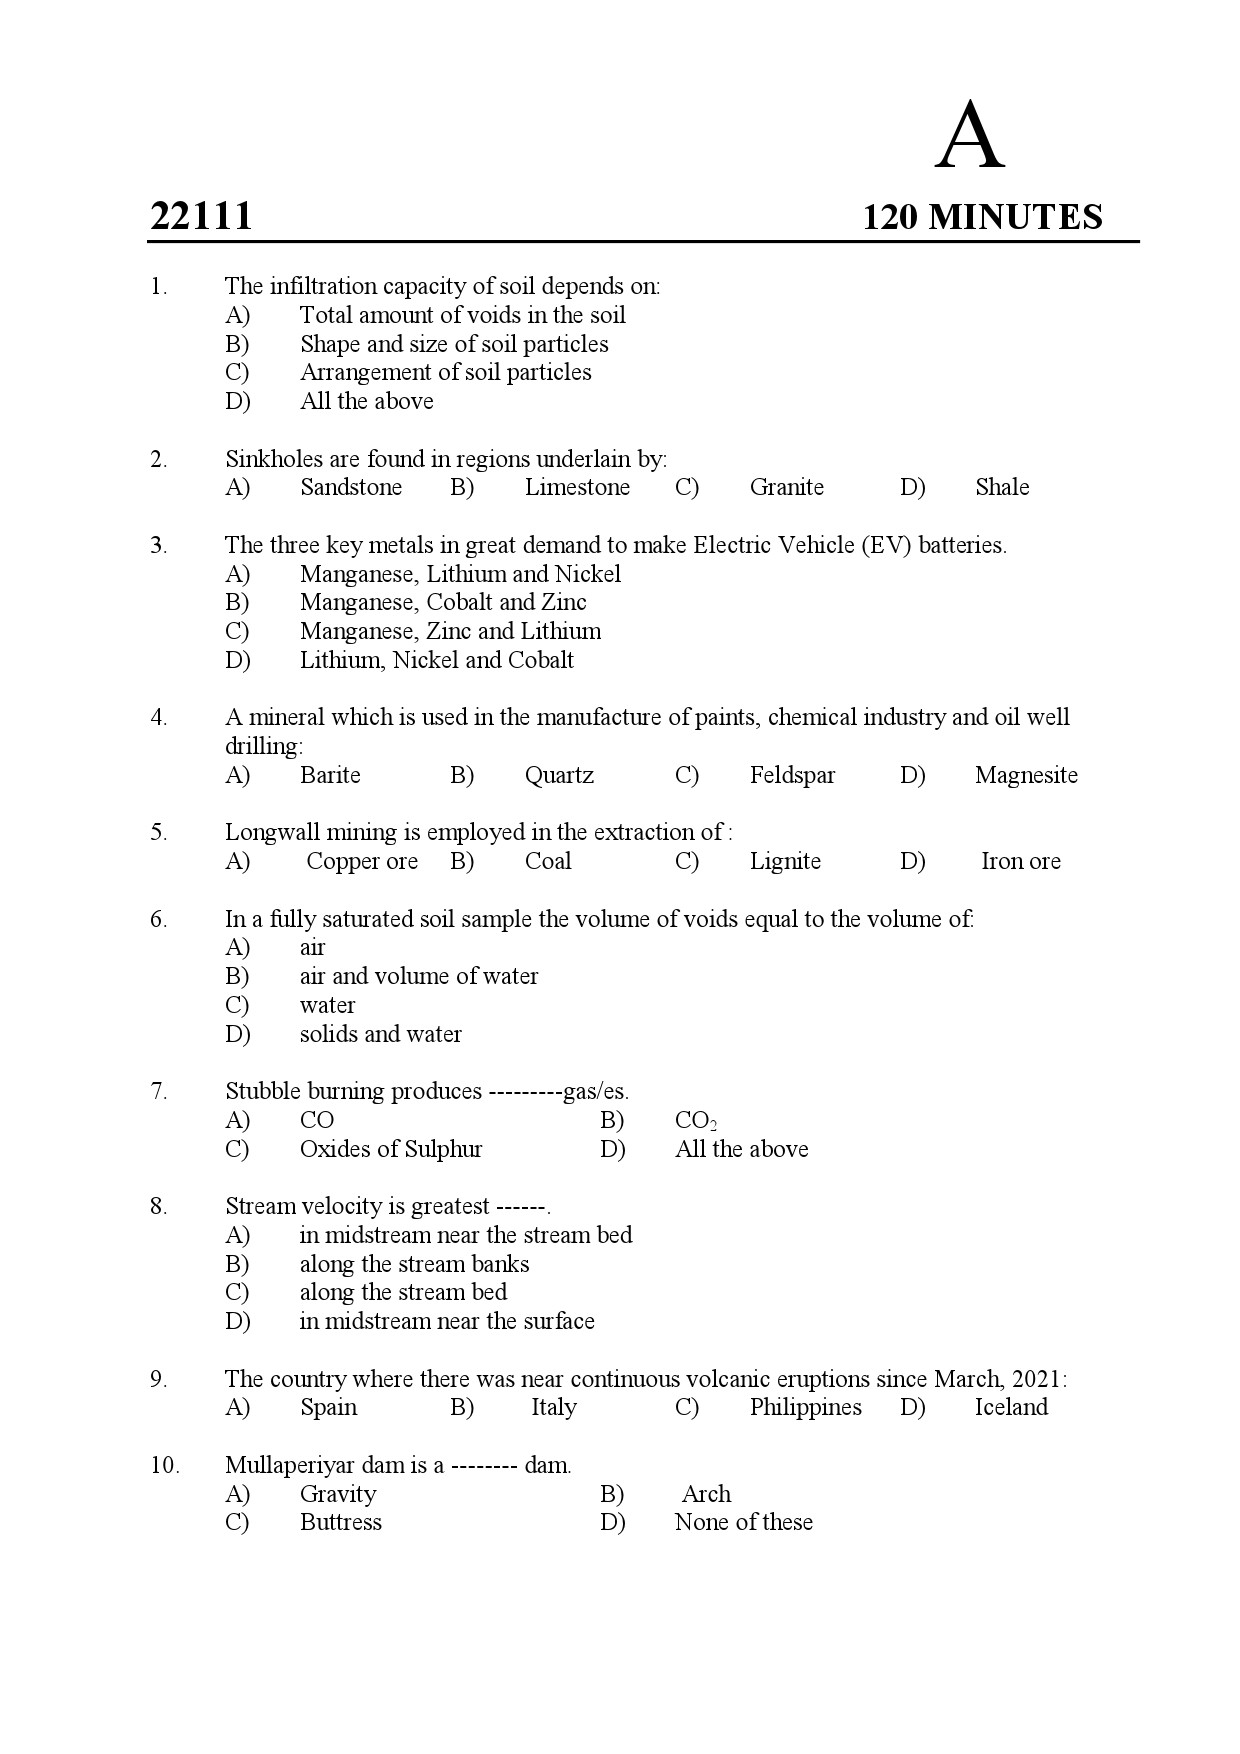 Kerala SET Geology Exam Question Paper January 2022 1